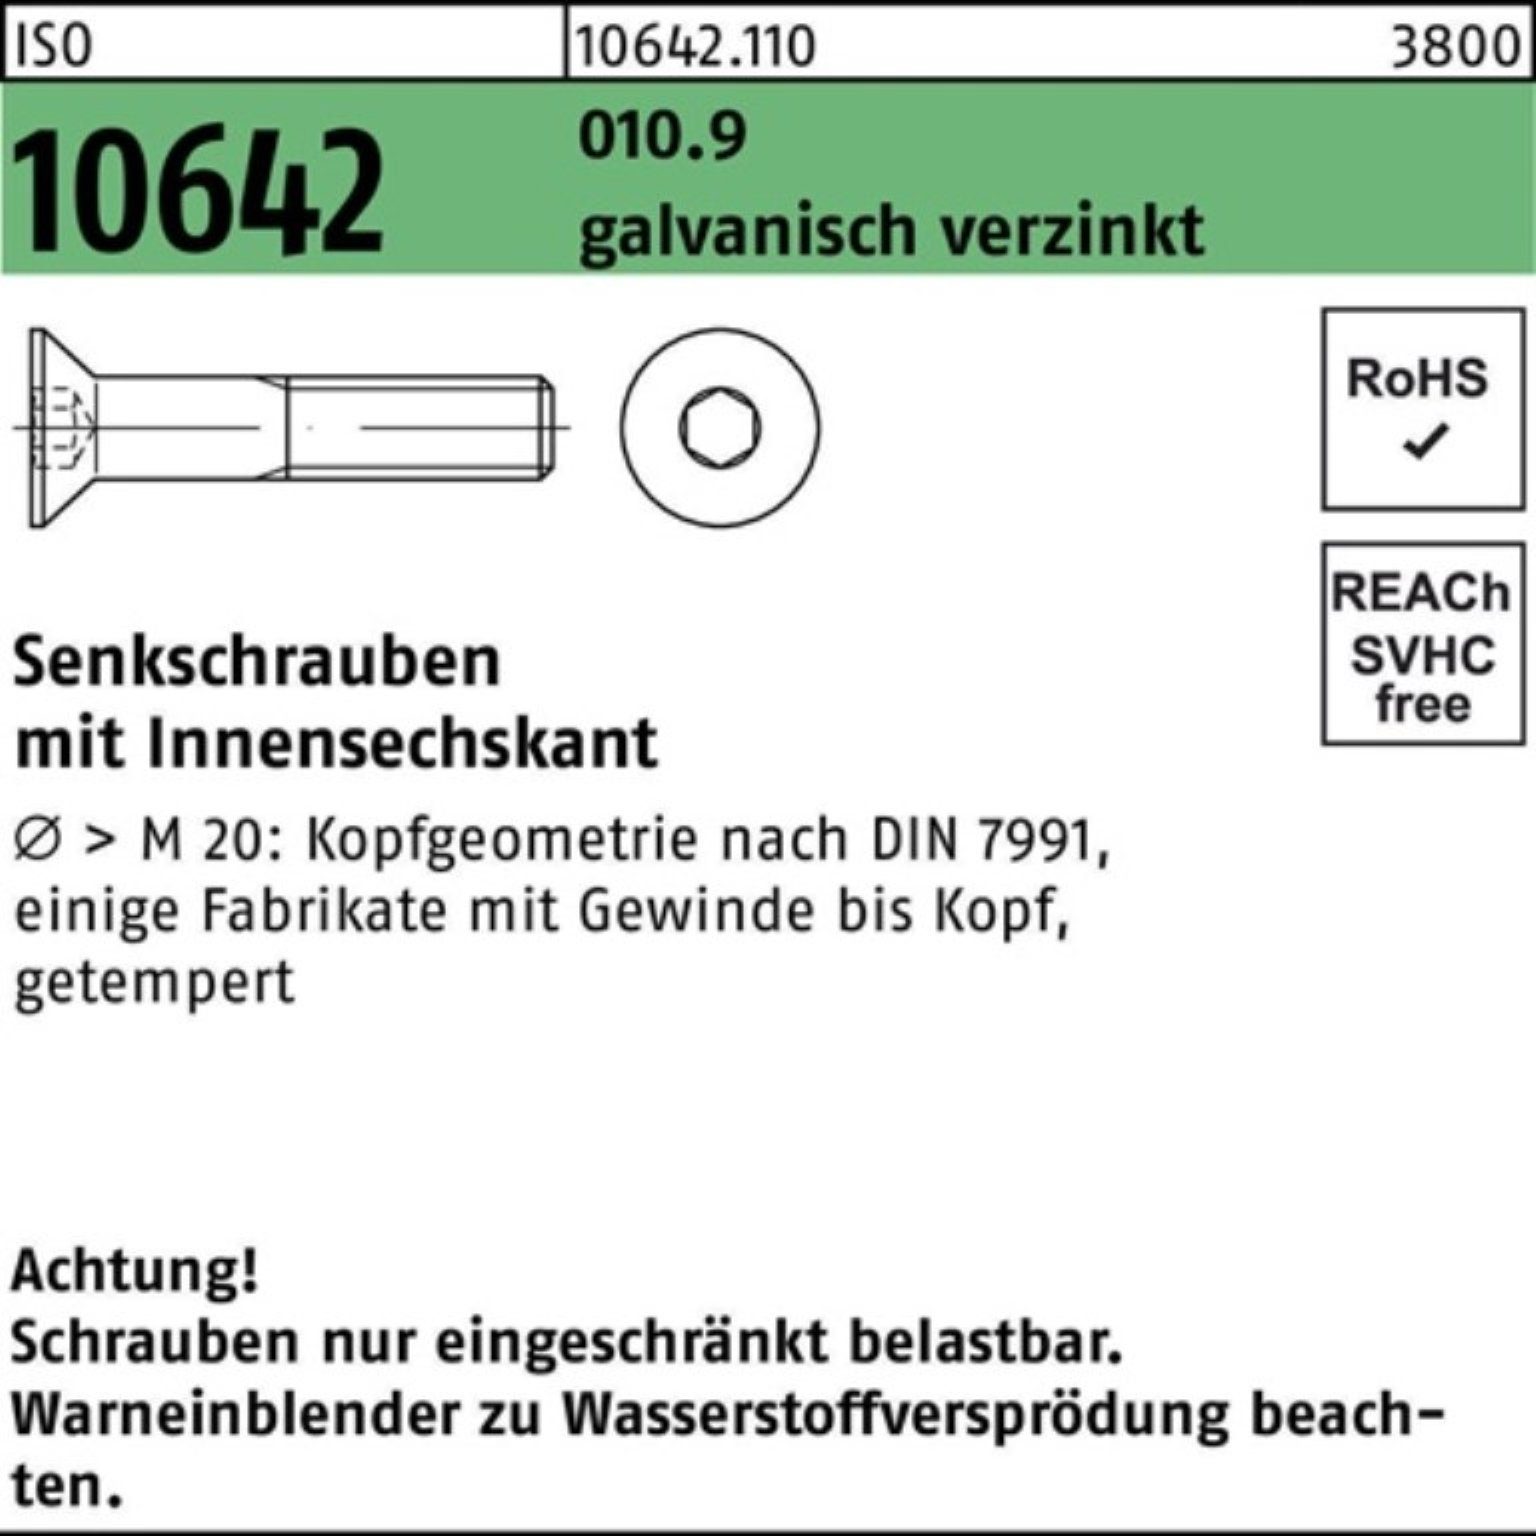 Senkschraube Senkschraube Innen-6kt Reyher 10642 2 ISO 010.9 galv.verz. M20x 30 Pack 100er